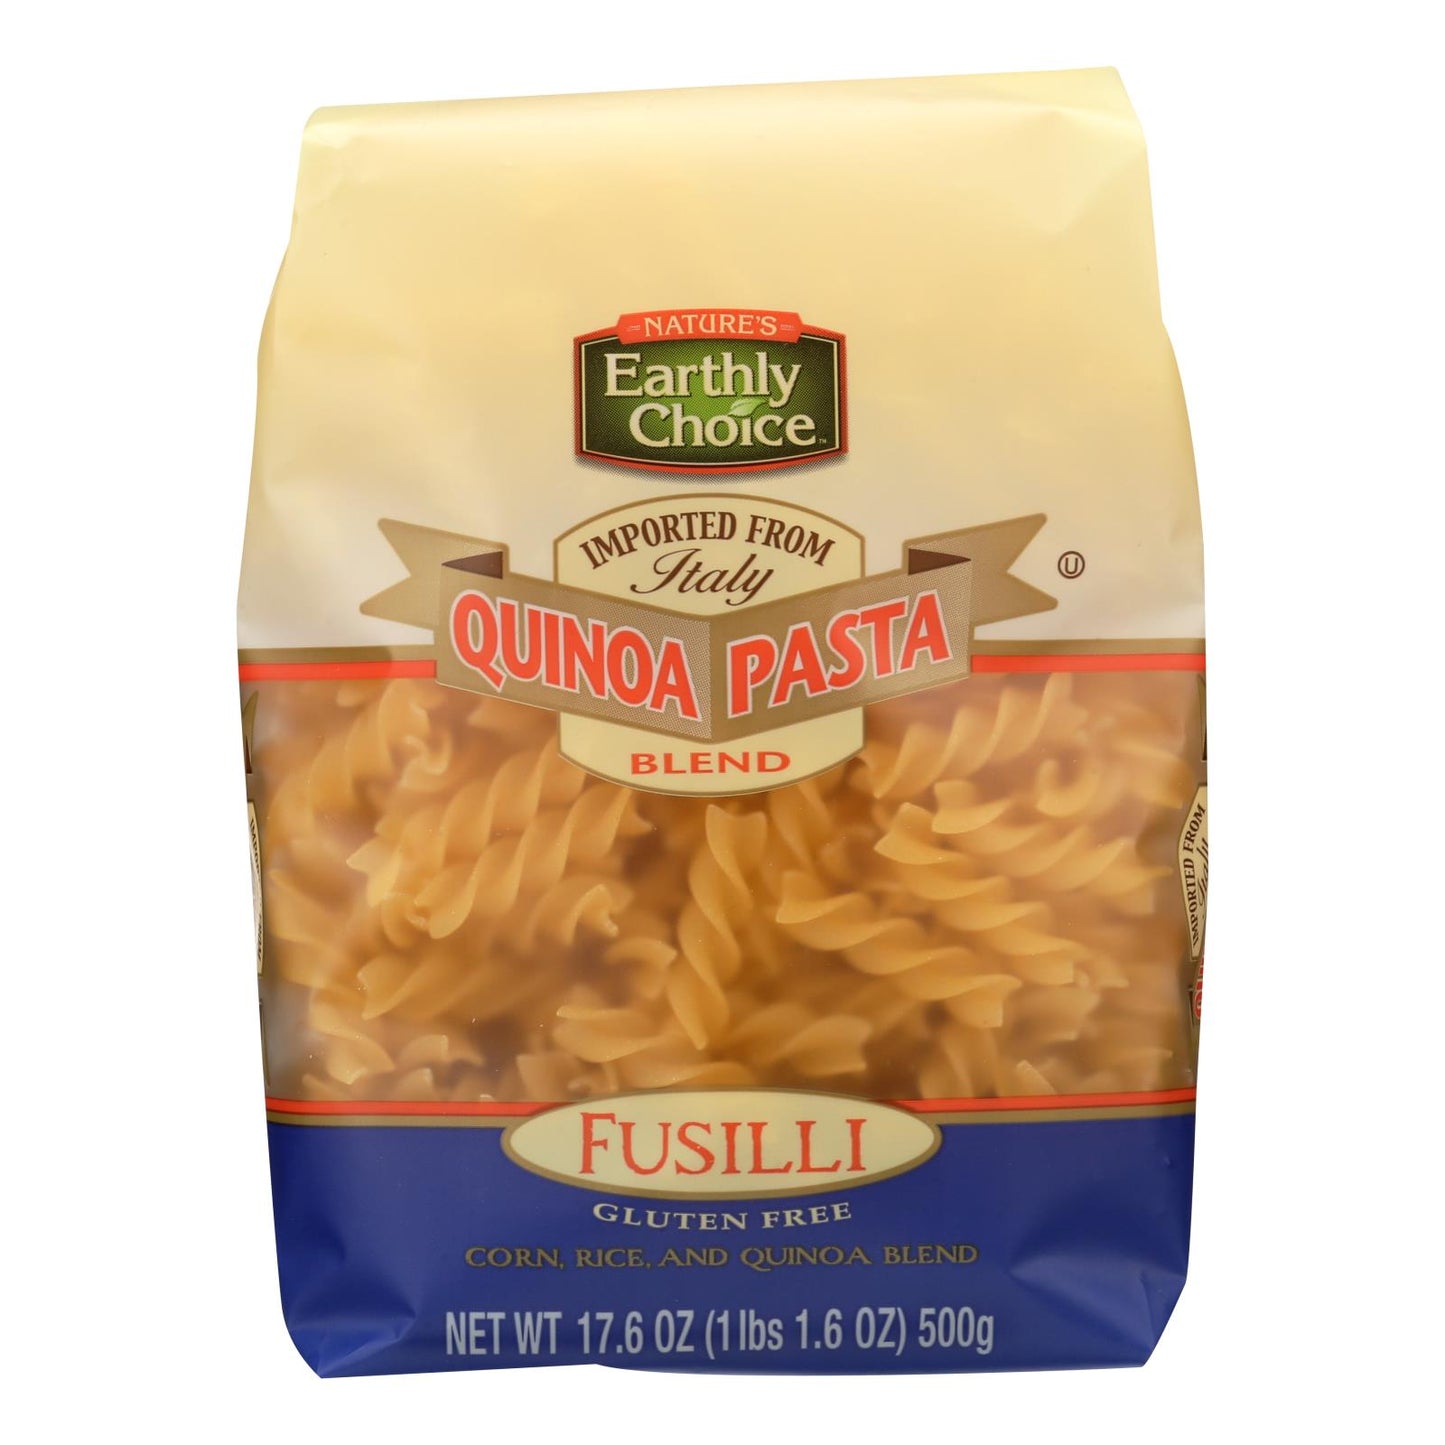 Nature's Earthly Choice Quinoa Pasta Blend Fusilli Corn Rice And Quinoa Blend - Case Of 6 - 17.6 Oz